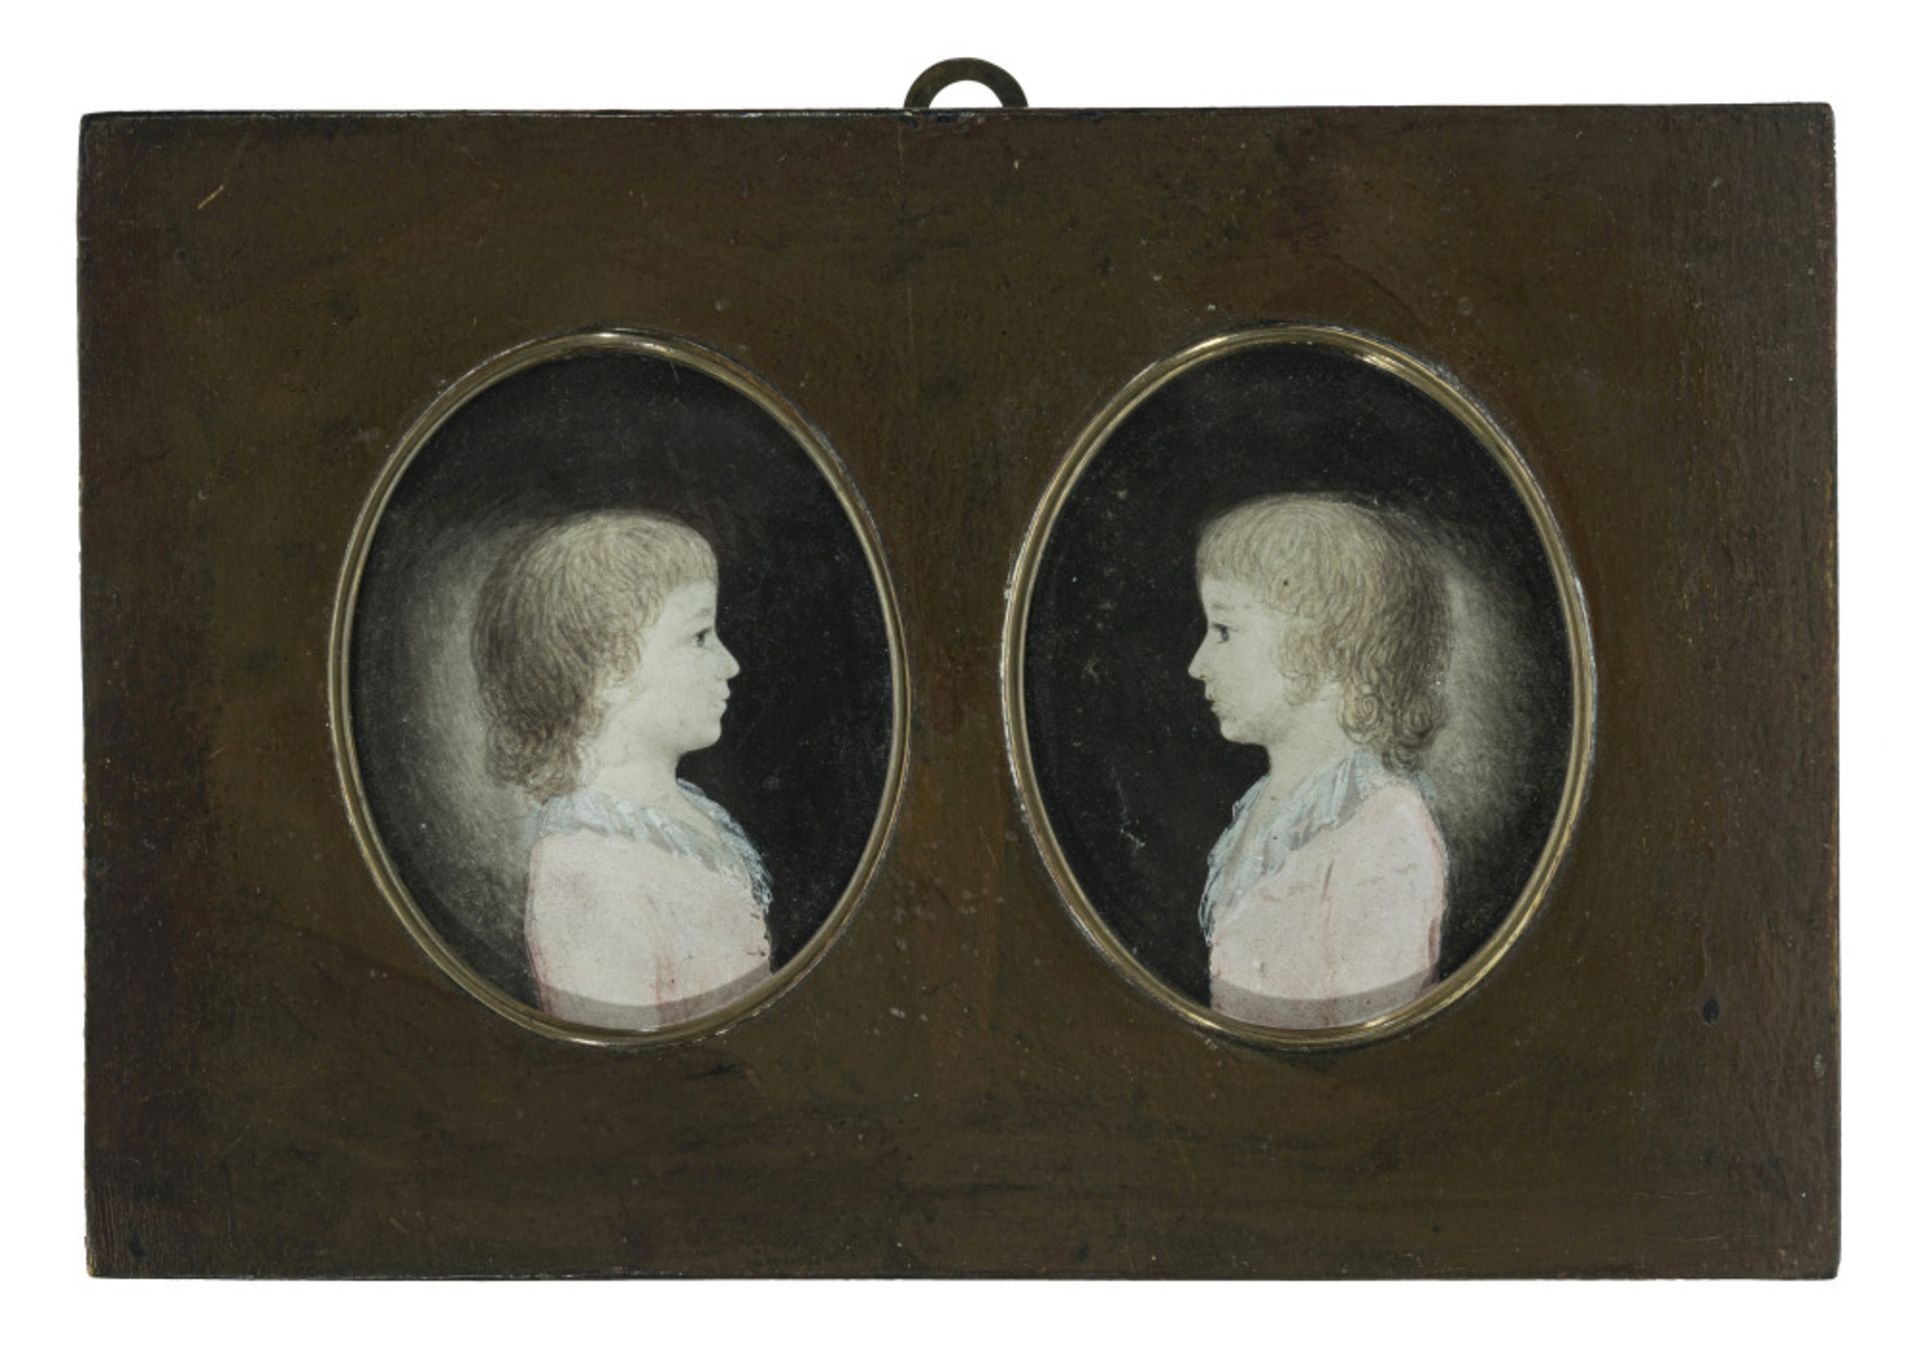 Deutsch late 18th century - Portraits of the twins Carl Friedrich Wilhelm and Friedrich Wilhelm Carl